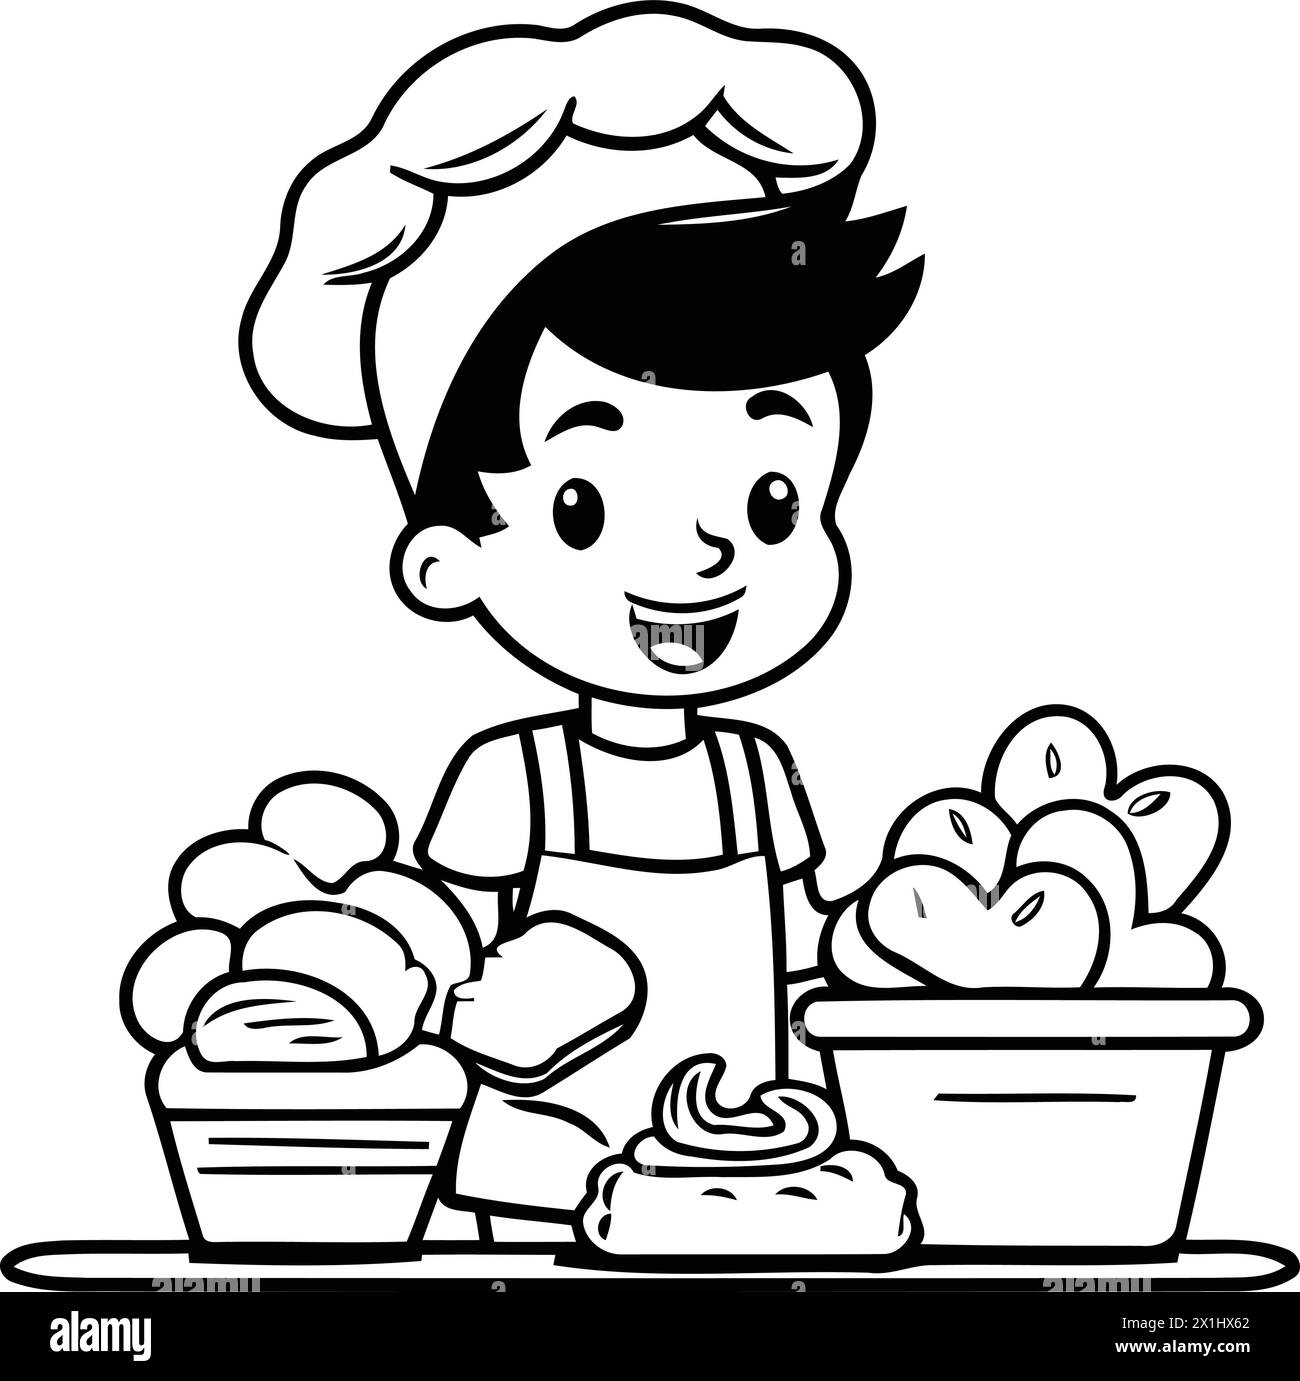 Cute cartoon boy chef with a basket of bread. Vector illustration. Stock Vector